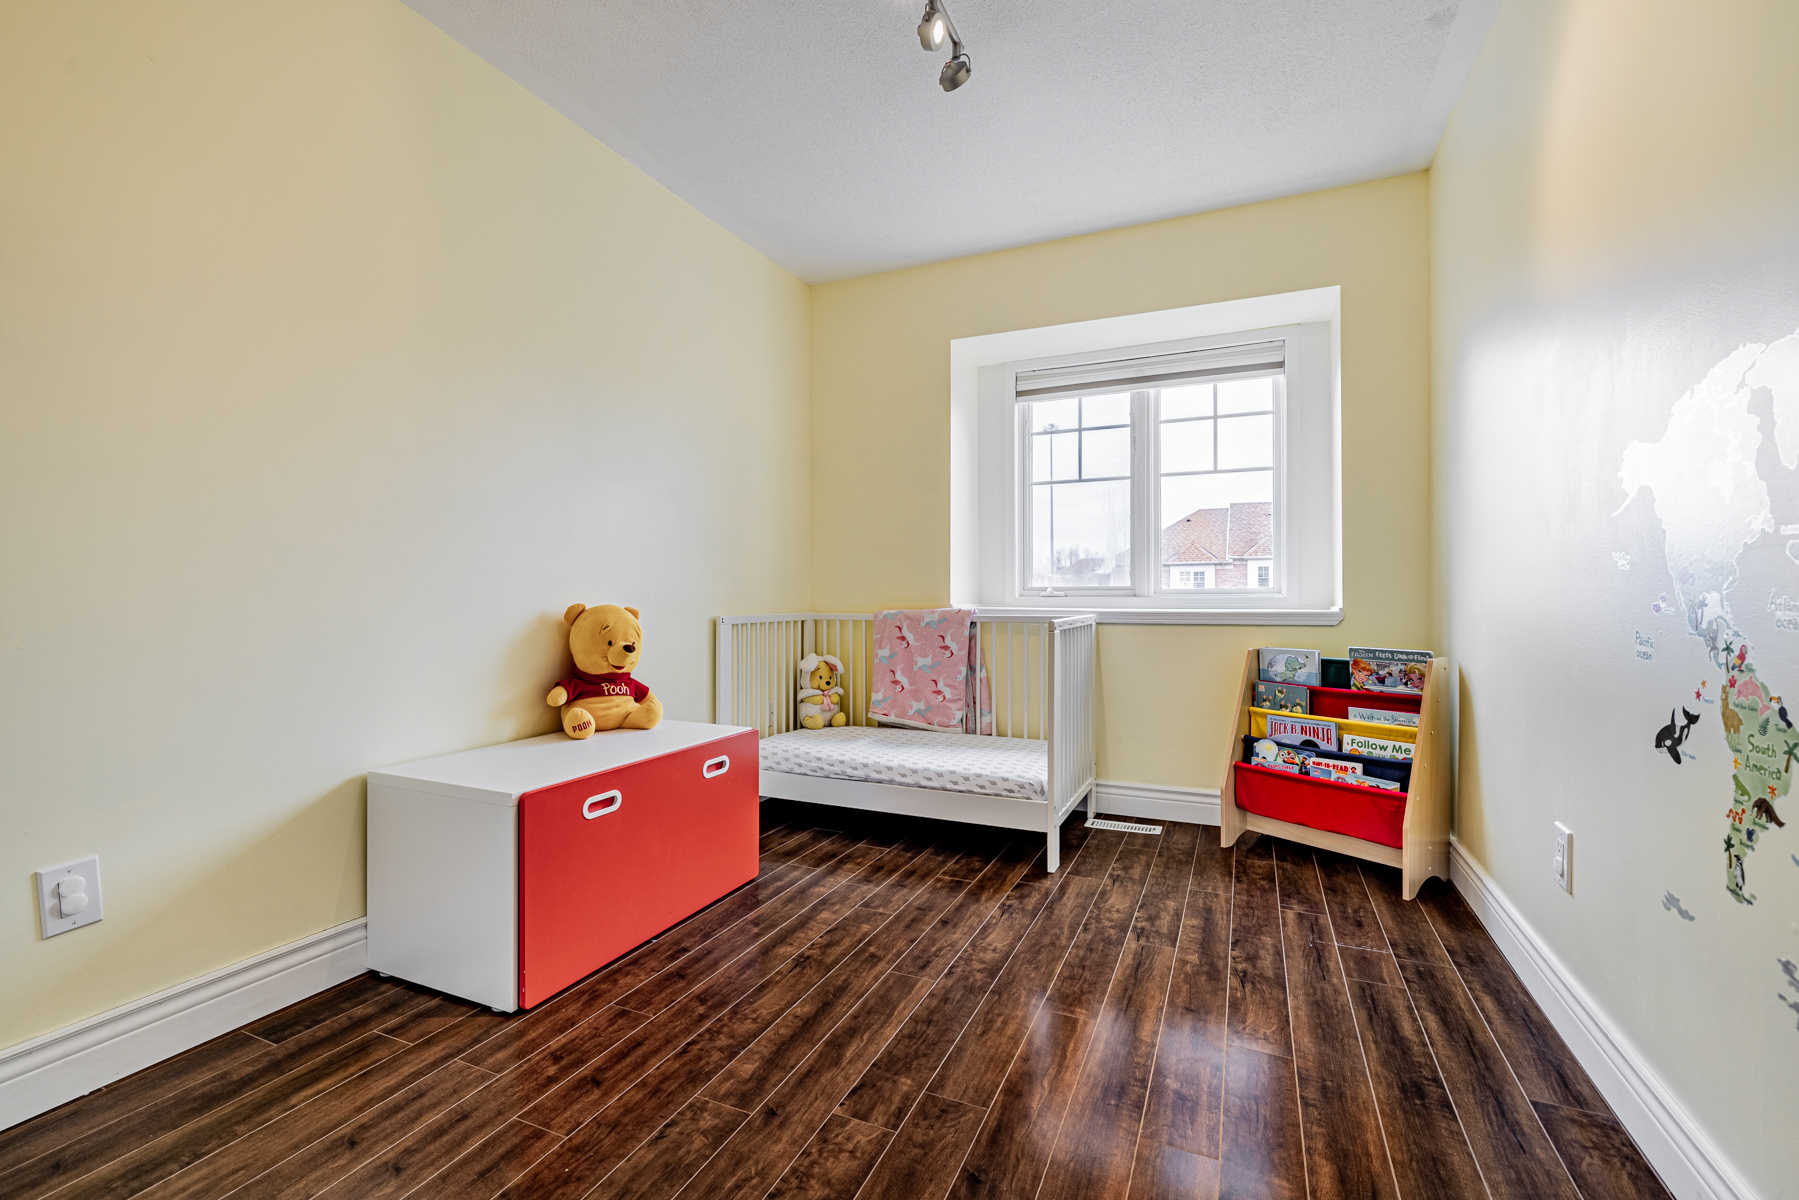 Bedroom nursery with crib, Winnie the Poo stuffy, bookshelf, yellow walls and laminate floors.